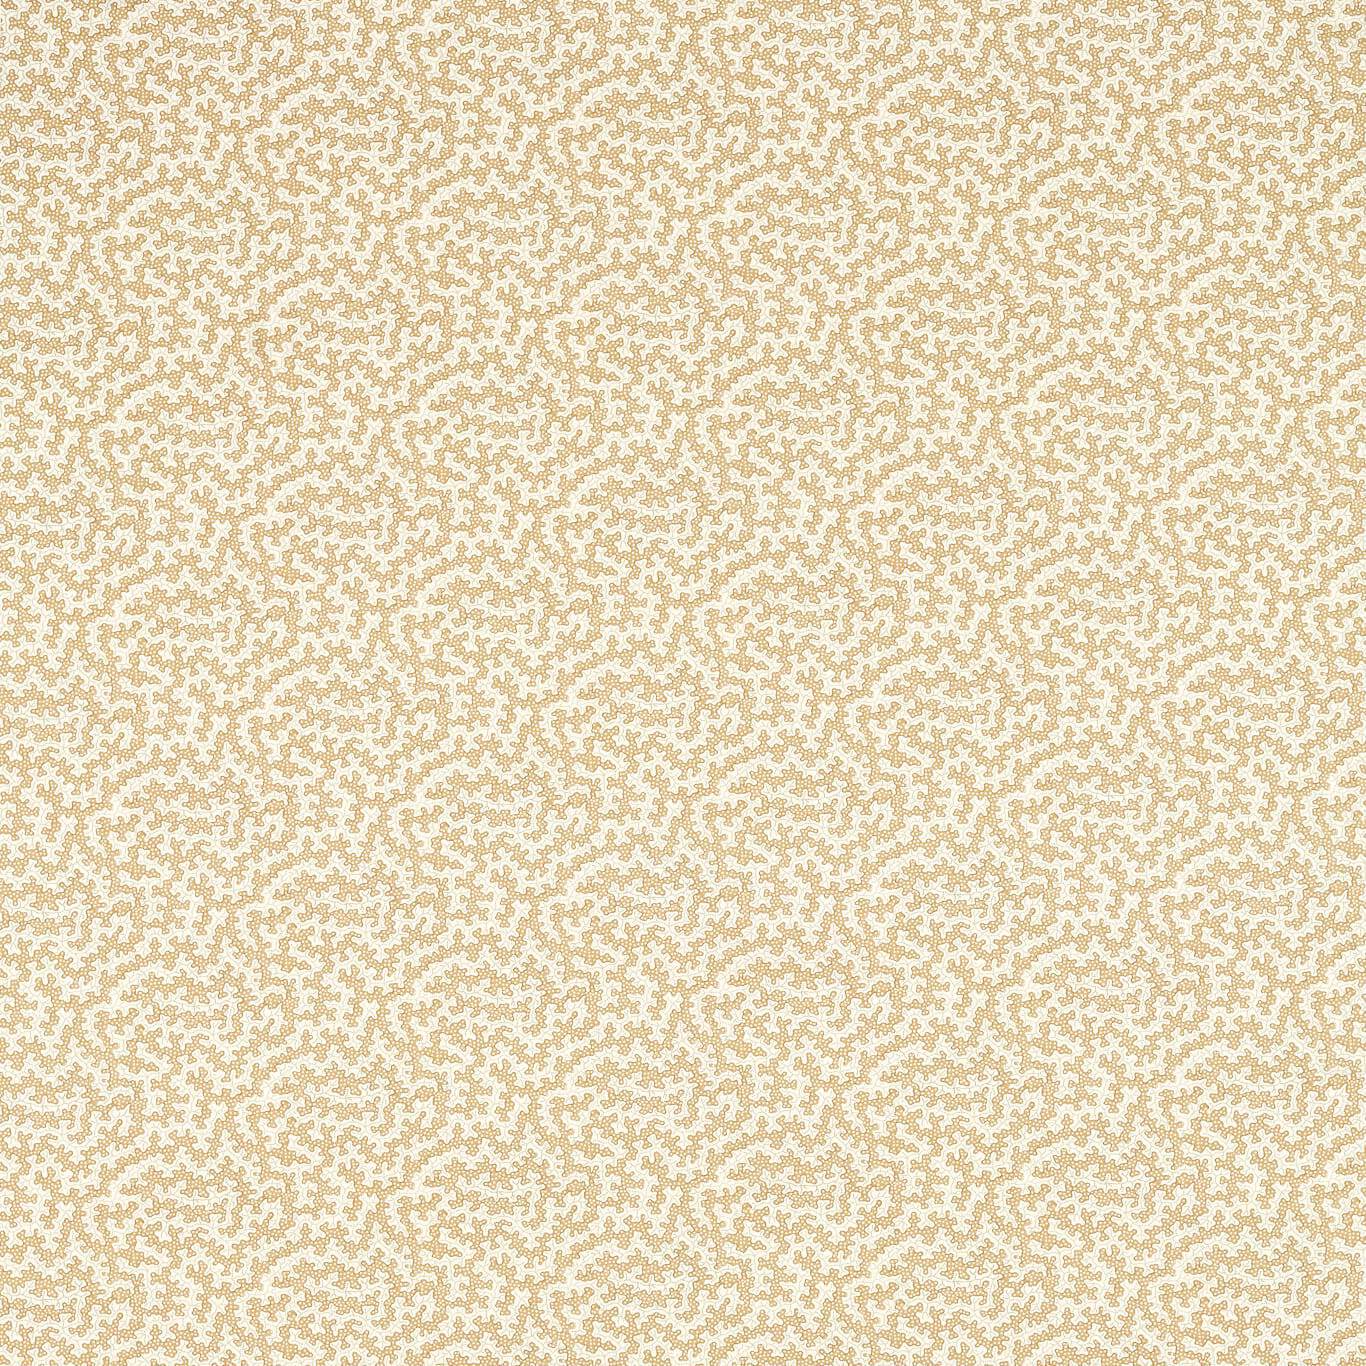 Truffle Wheat Fabric by SAN